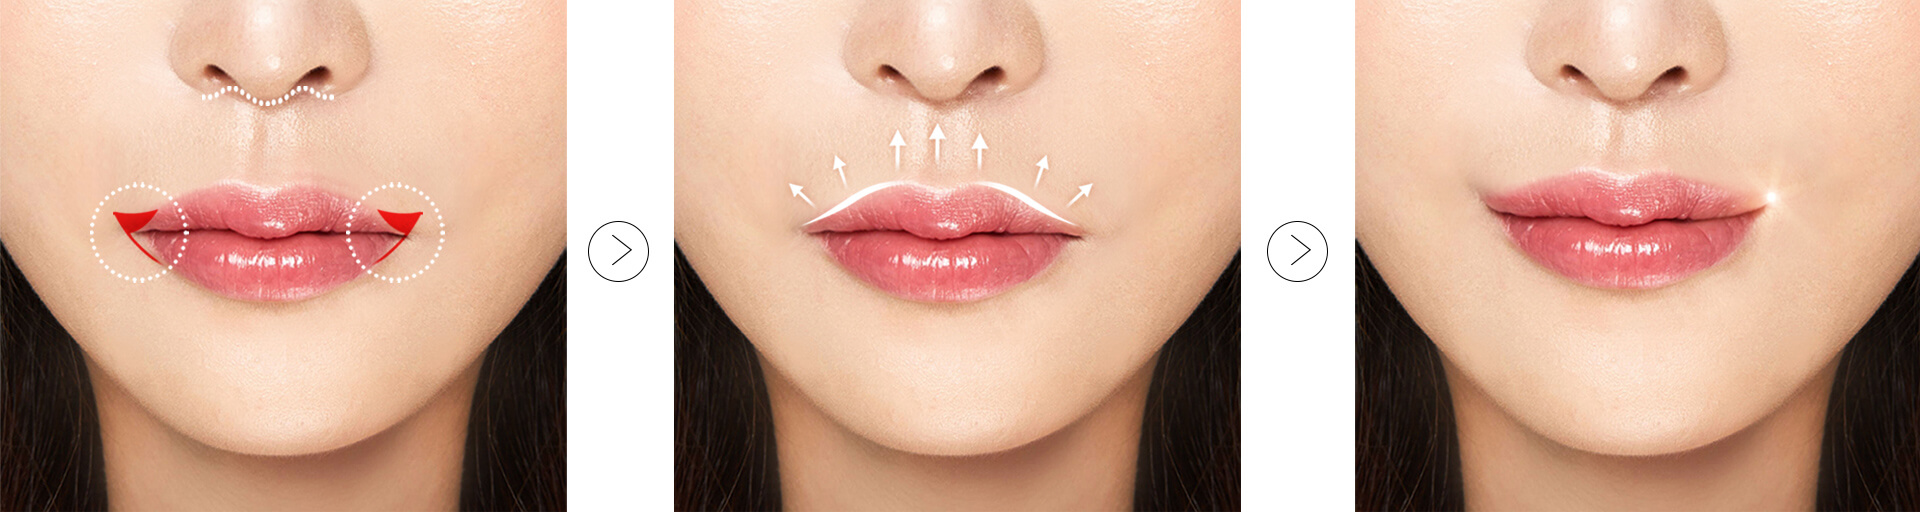 Bullhorn lip lift + Lateral philtrum reduction + smile lift surgery procedure | Hyundai Aesthetics Plastic Surgery